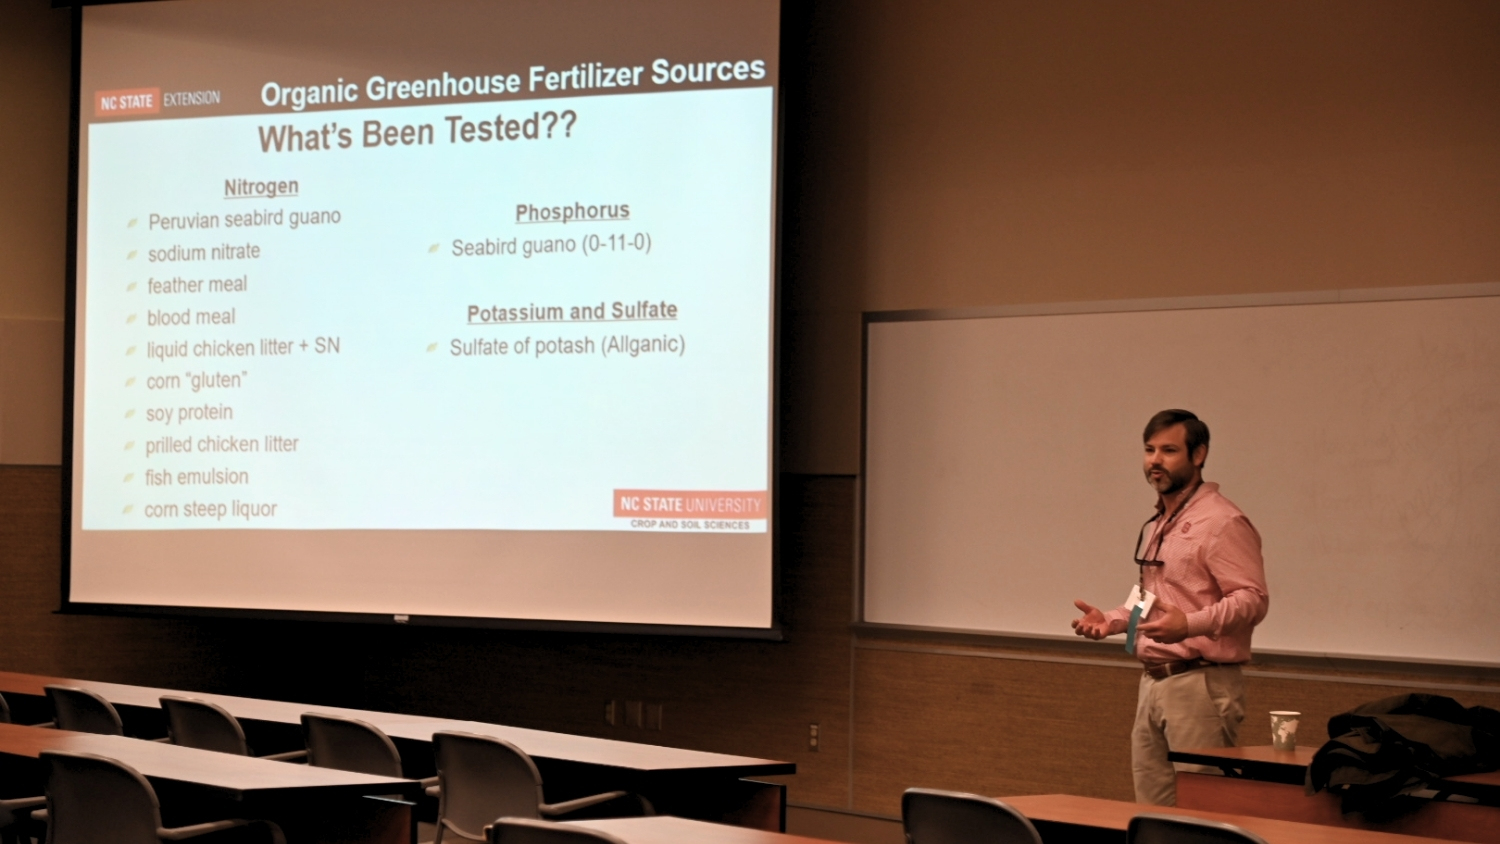 Matthew Vann presents organic tobacco fertilizer sources